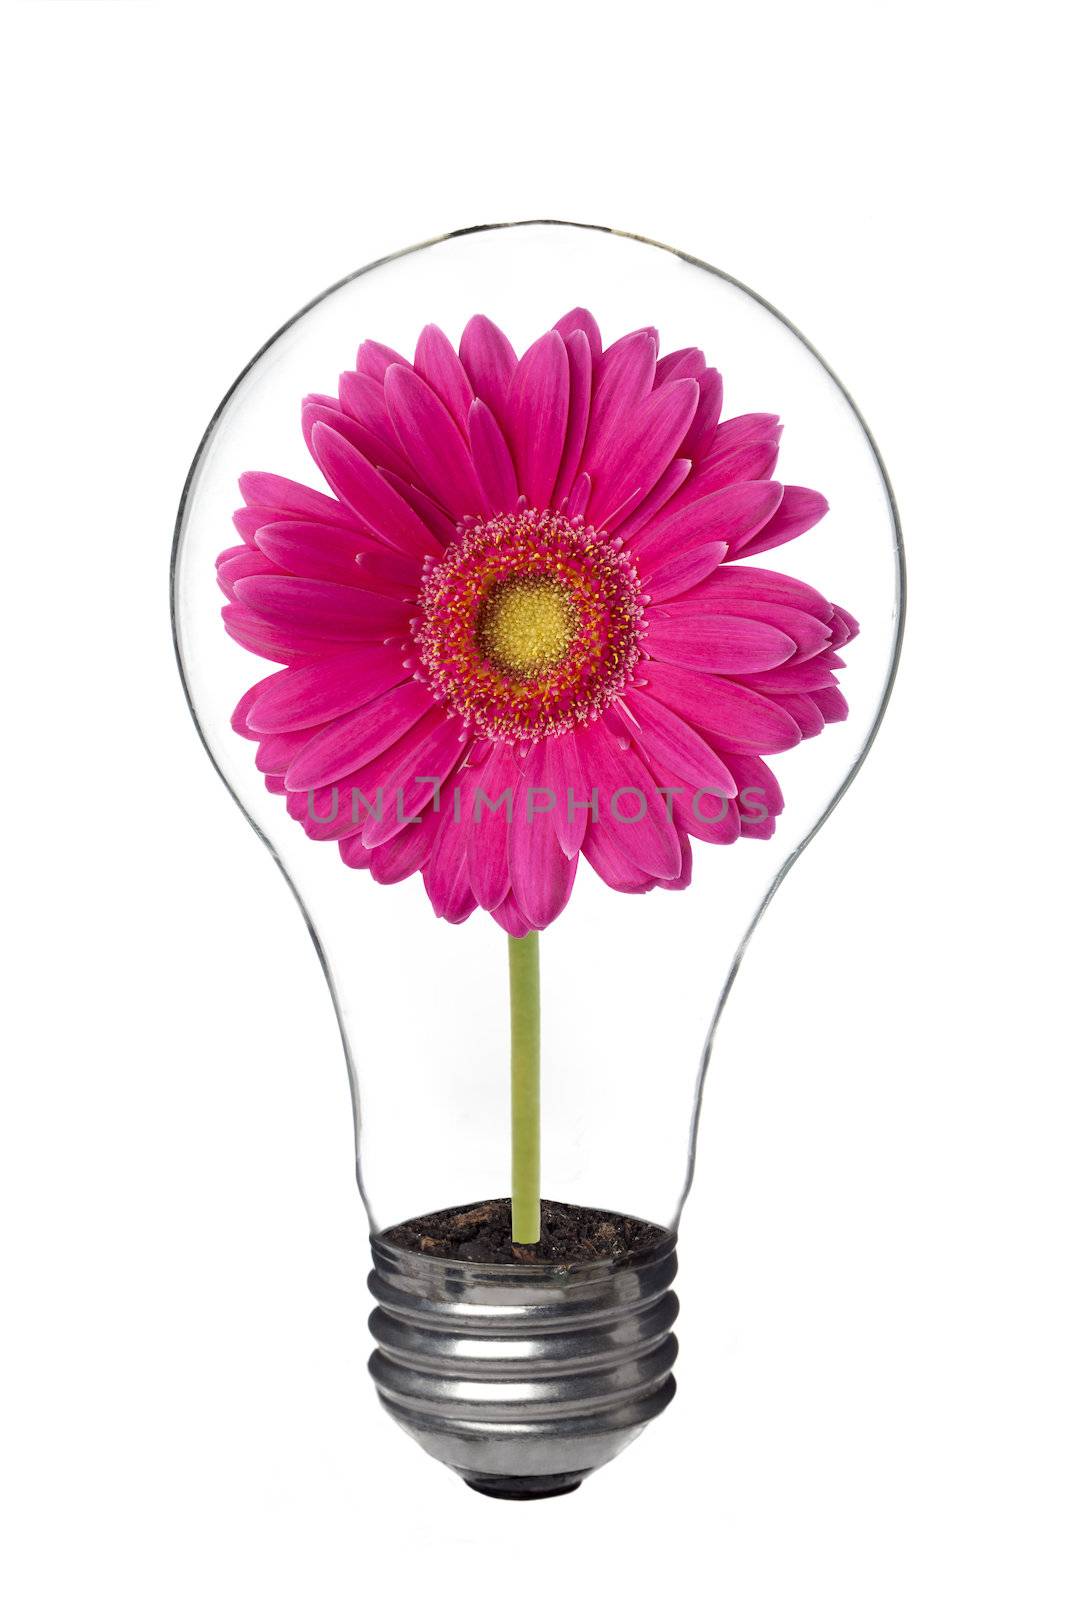 light bulb with pink flower inside by kozzi